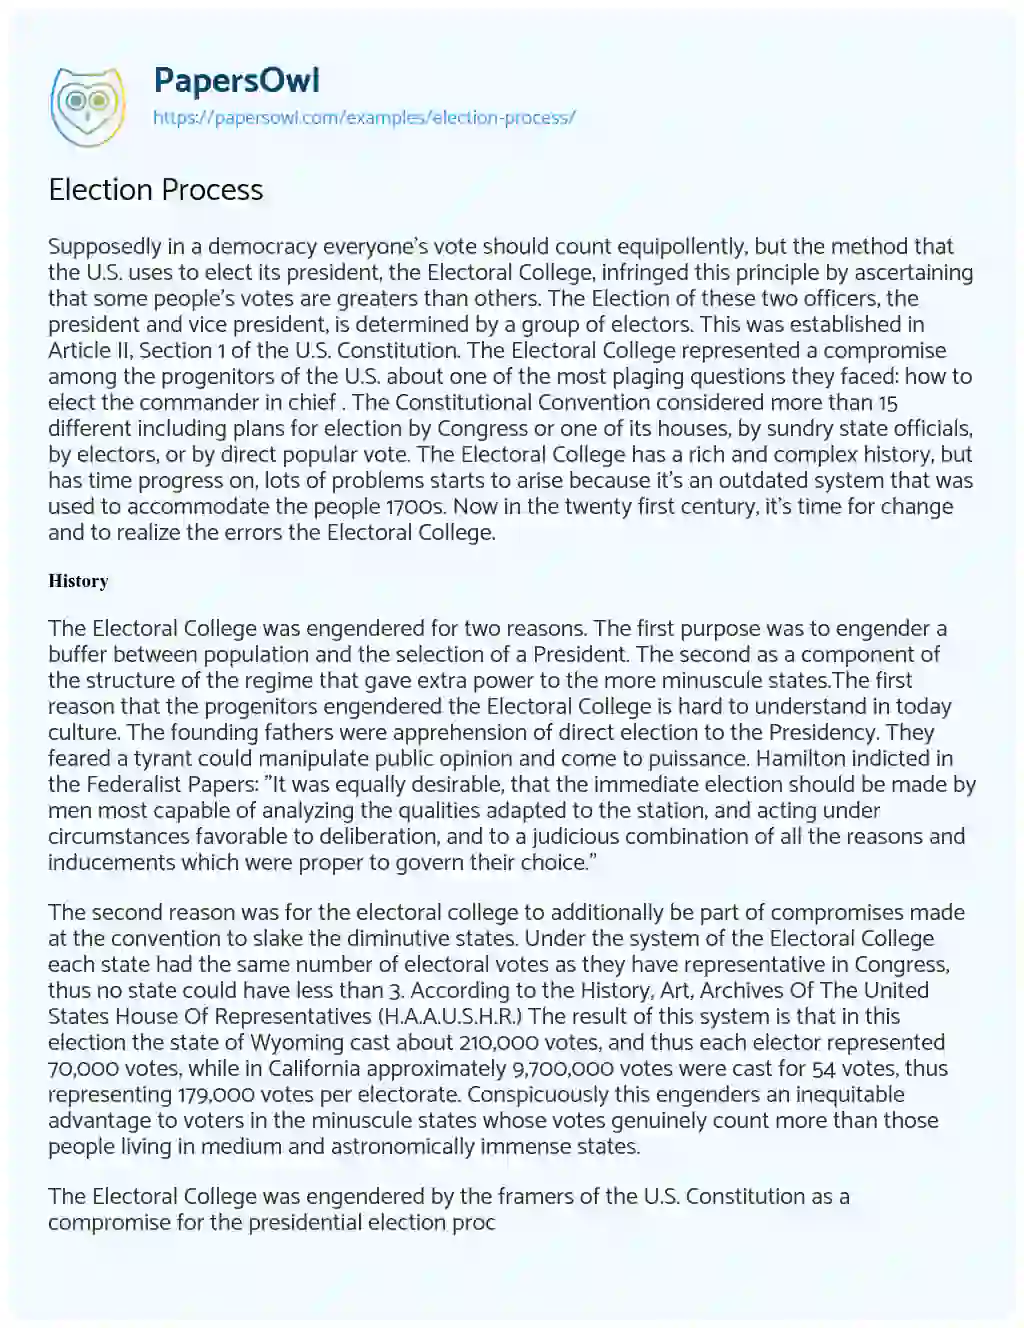 Election Process essay